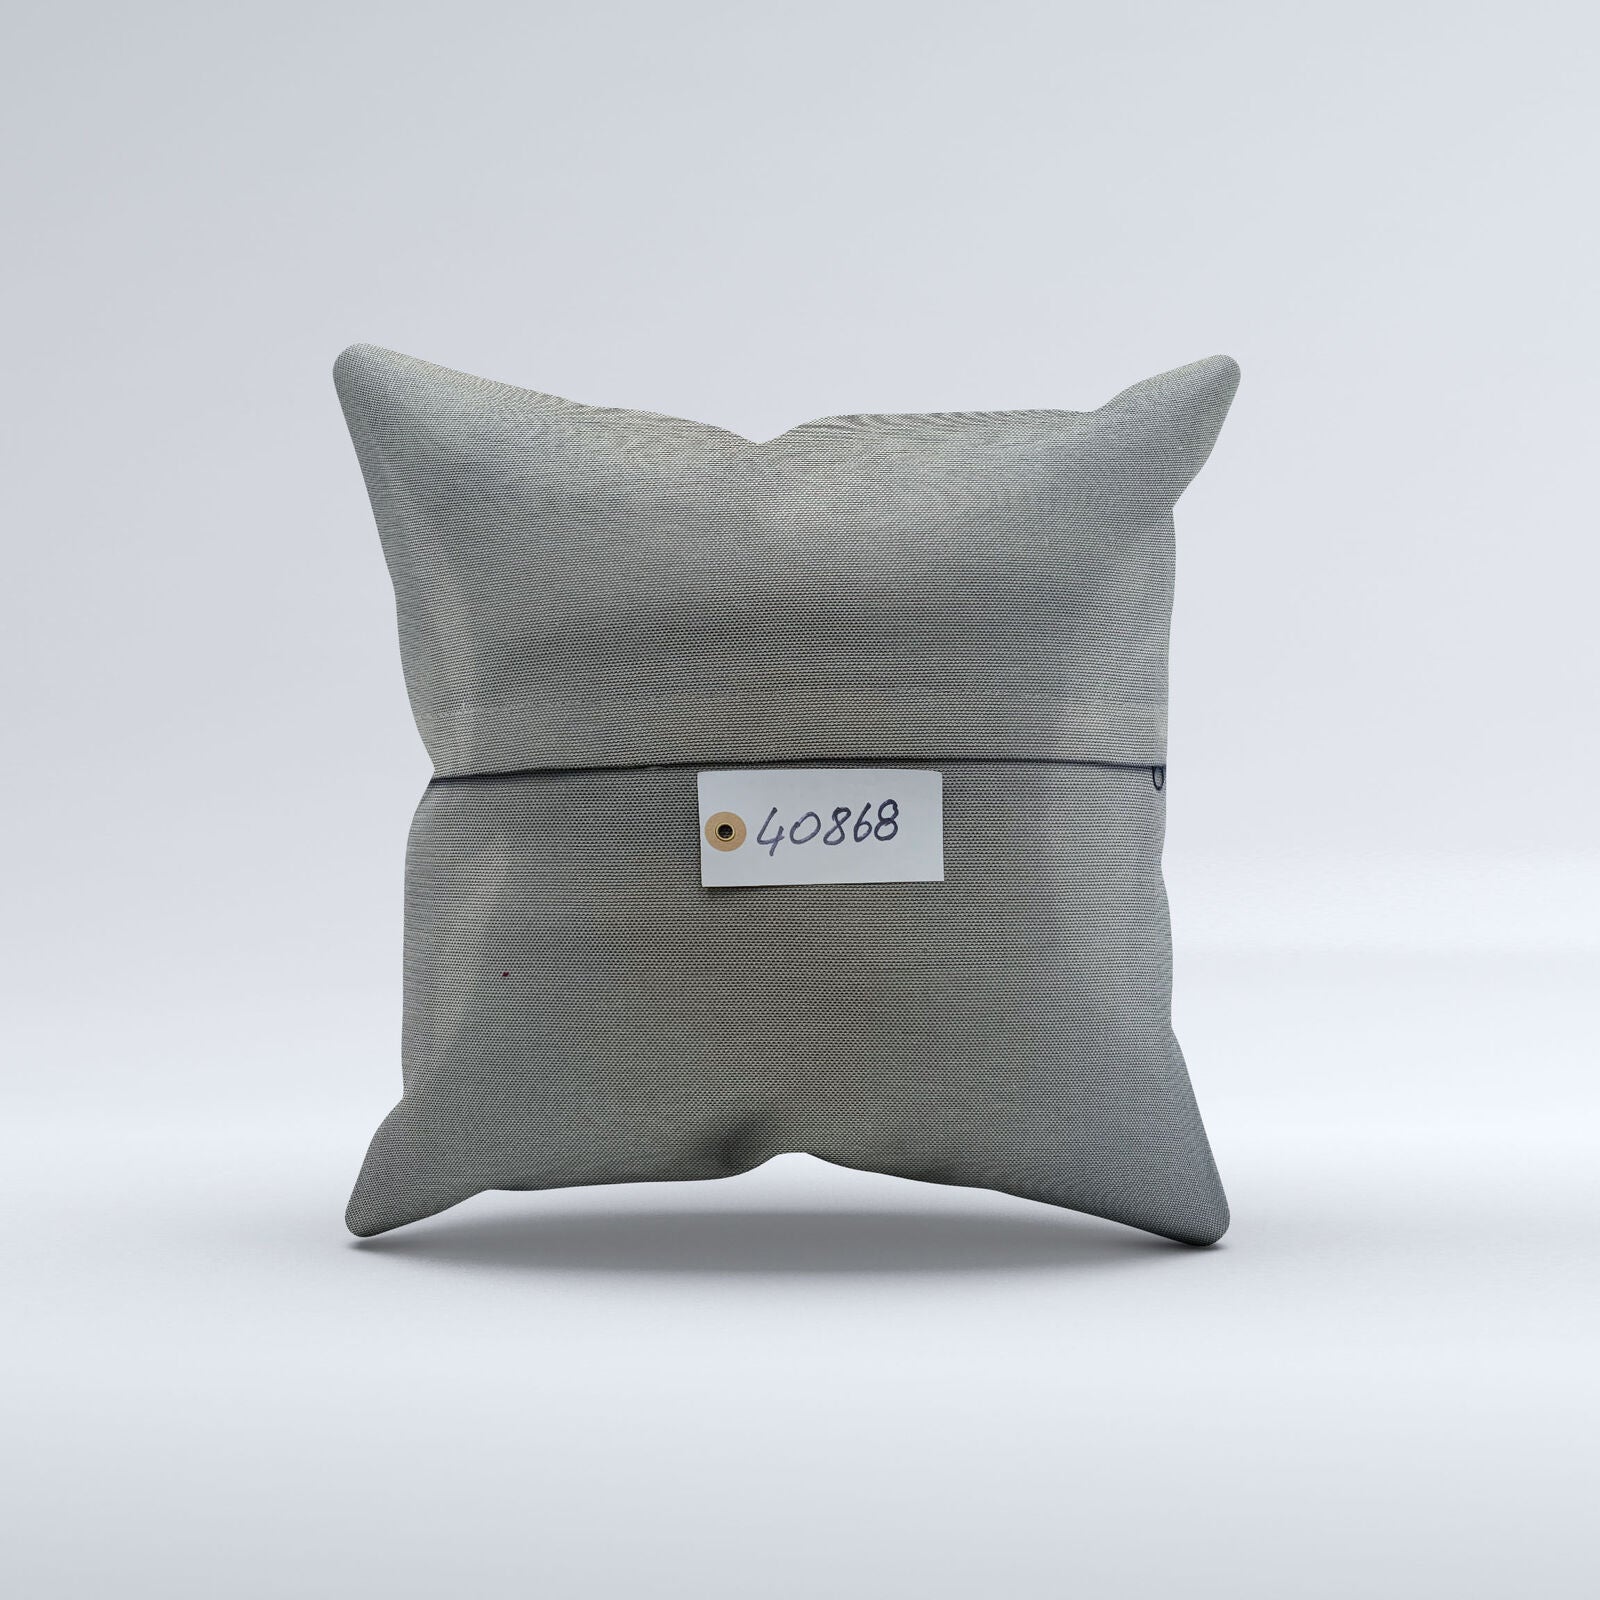 Vintage Turkish Kilim Cushion Cover 40x40 cm Square Wool Kelim Pillowcase  40868